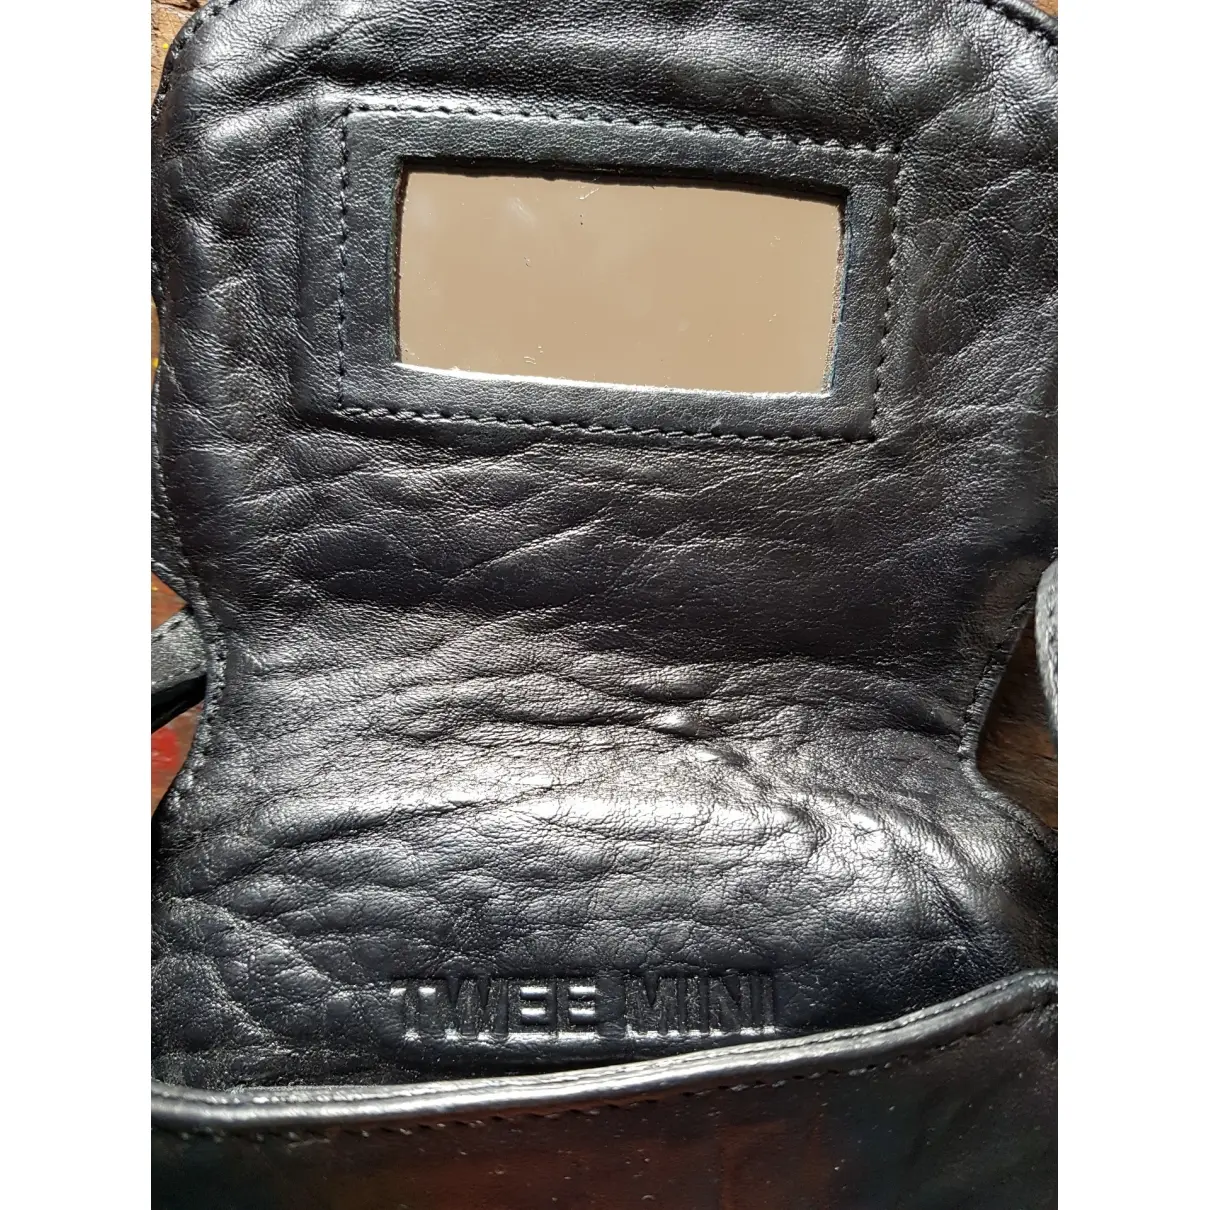 Buy Jerome Dreyfuss Twee Mini leather crossbody bag online